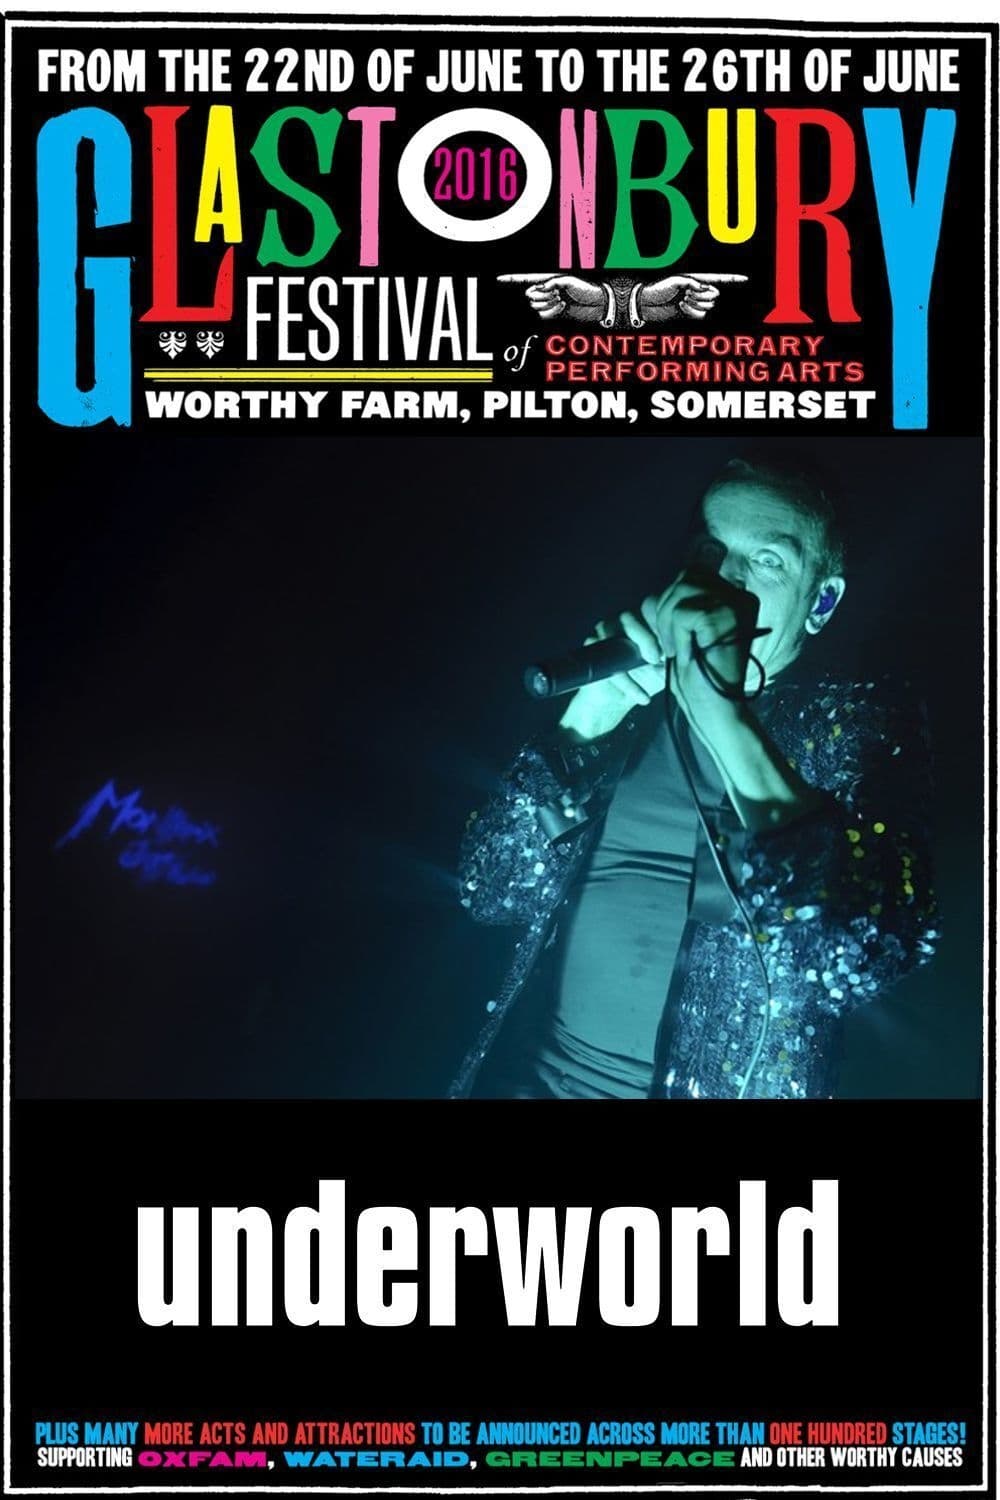 Underworld Glastonbury 2016